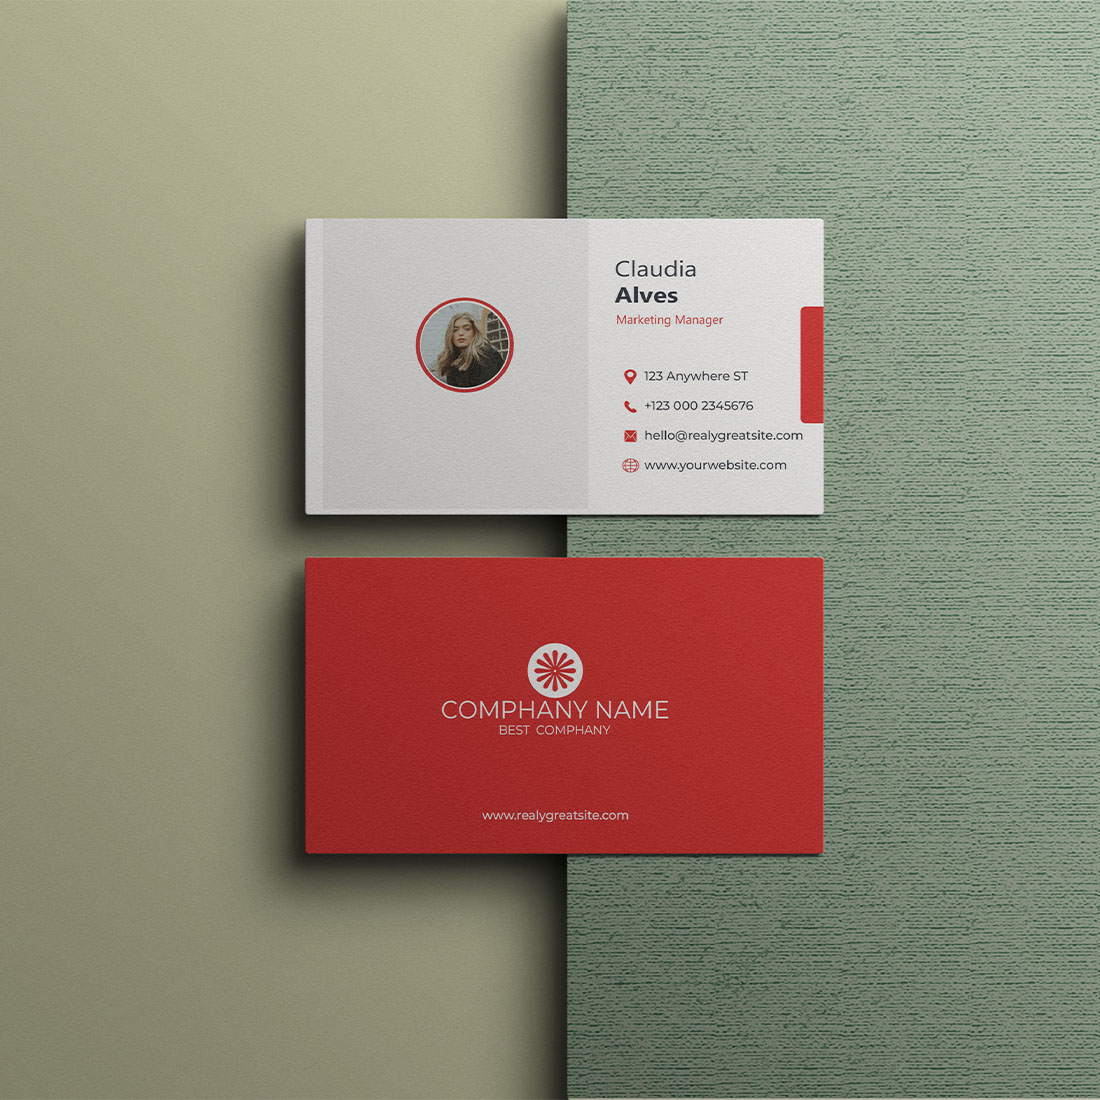 Business Card Design pinterest image